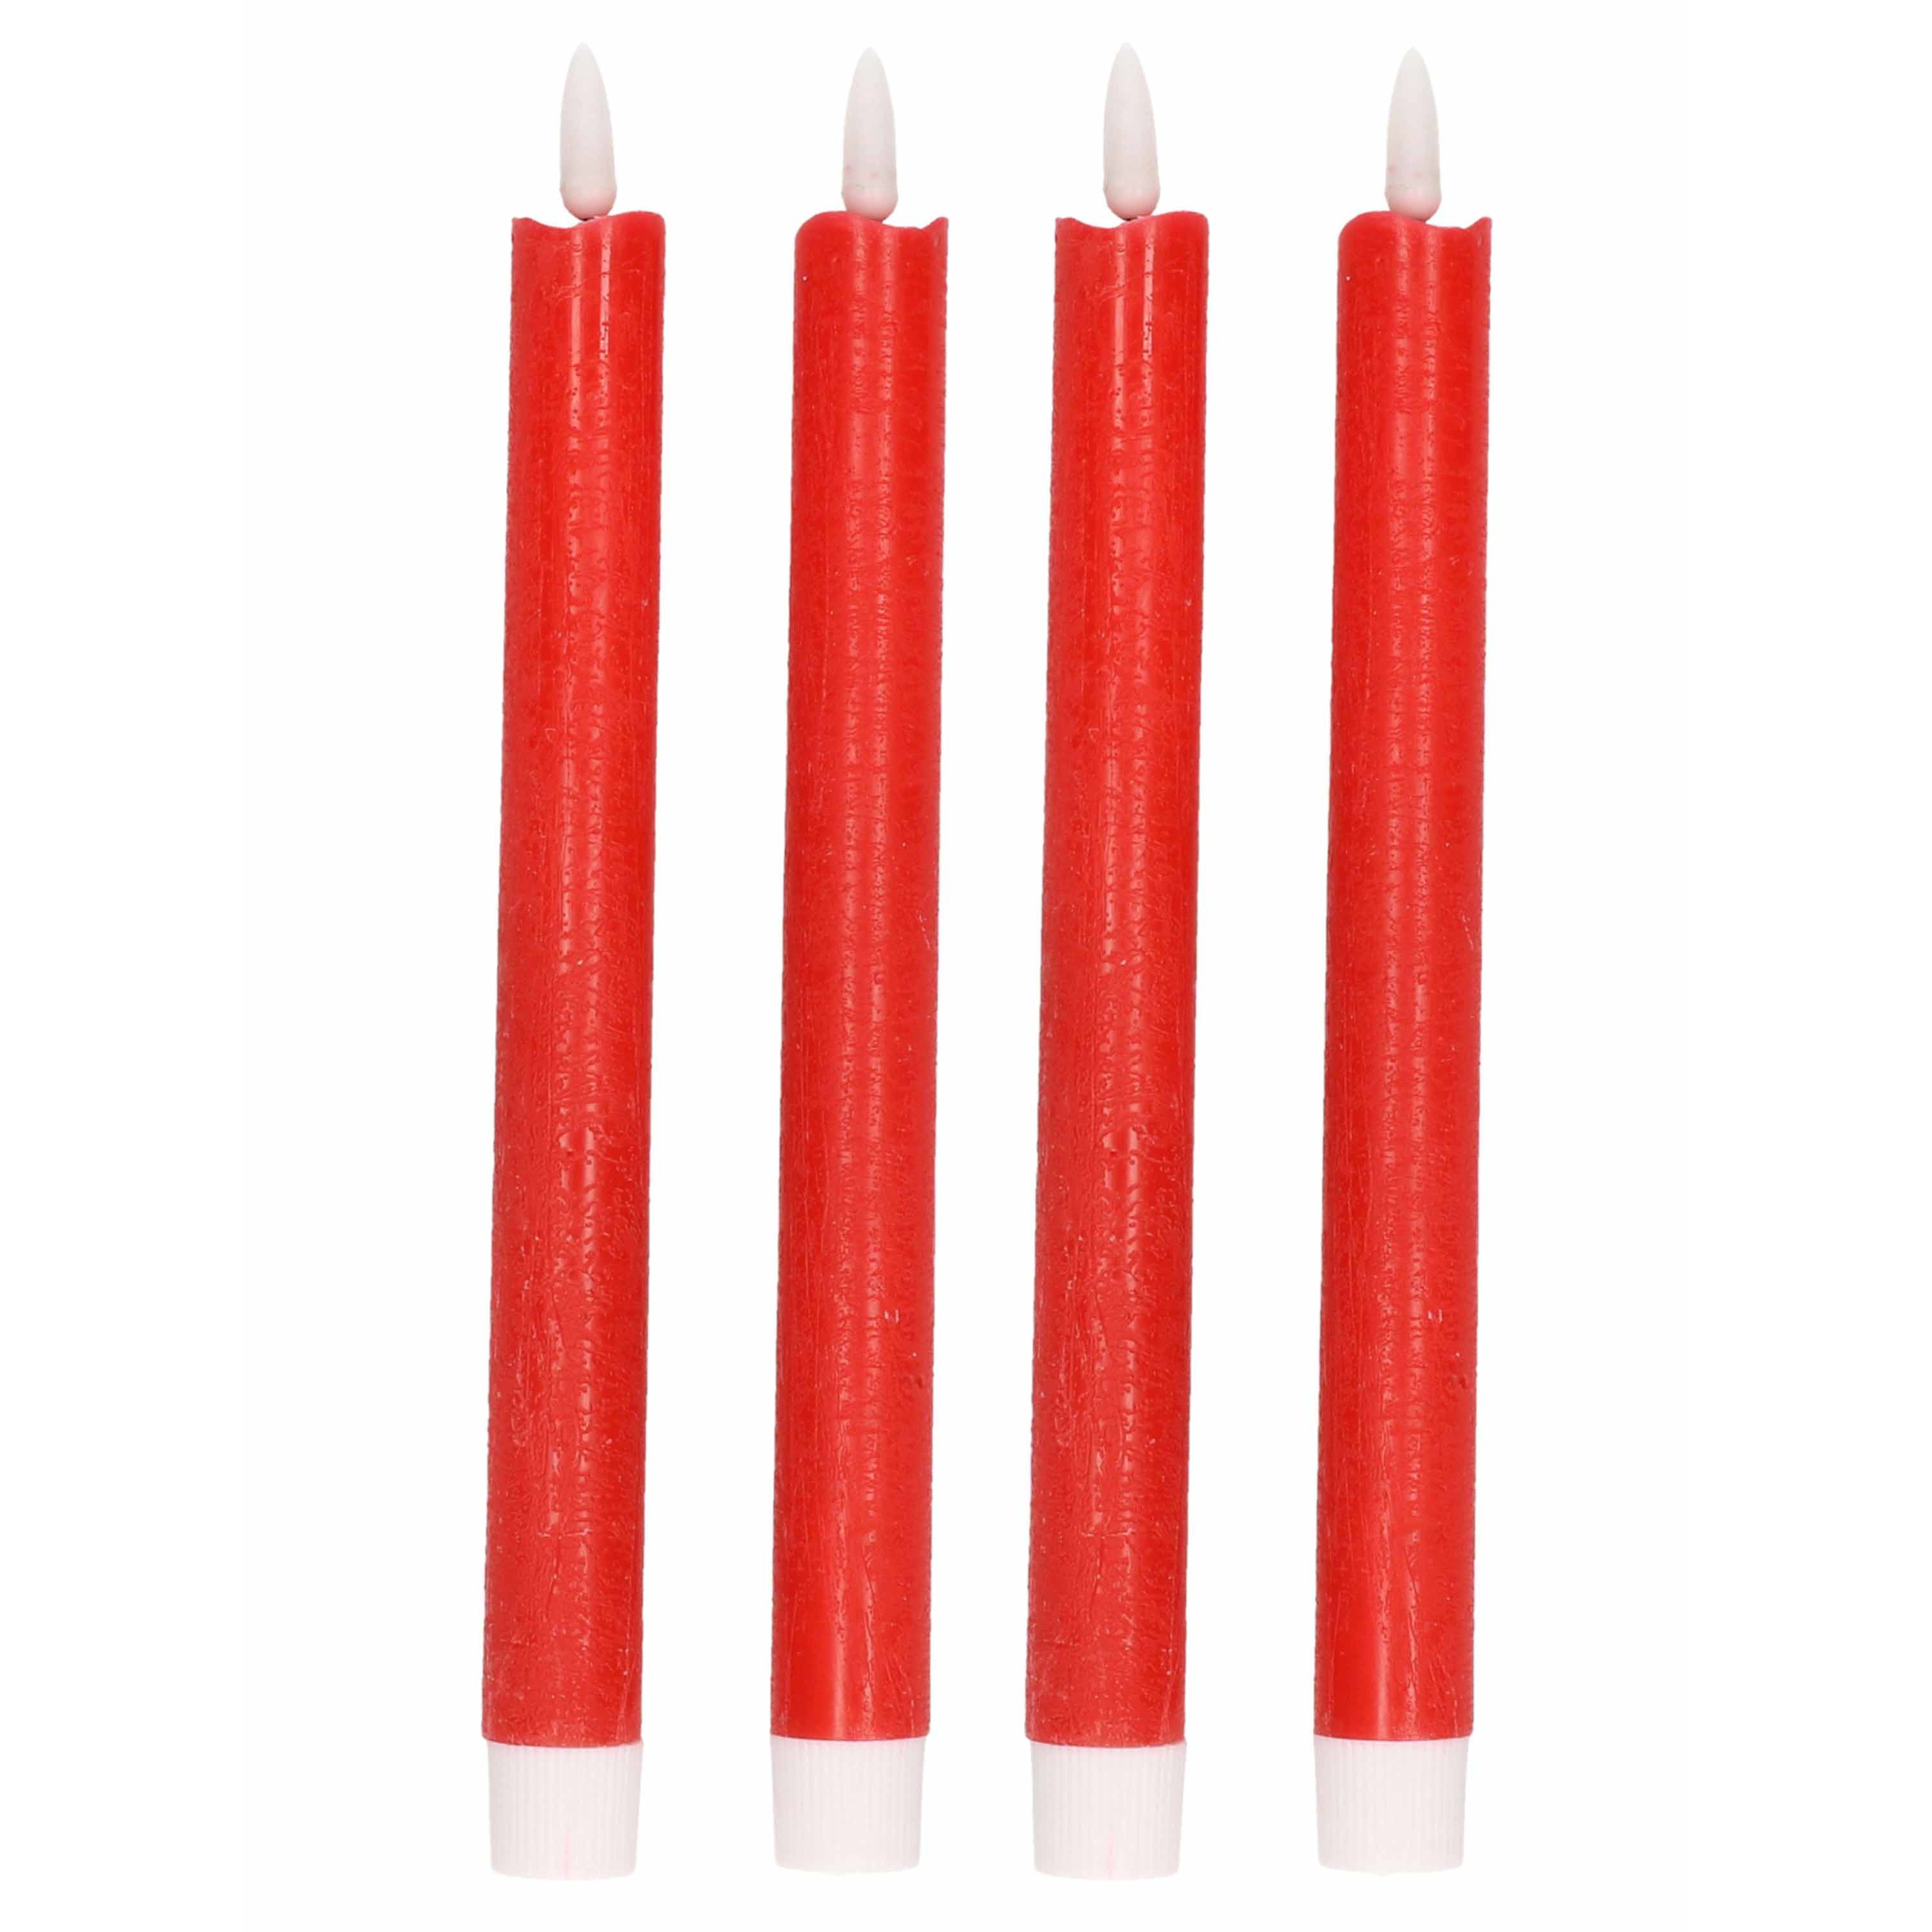 Bellatio Decorations 4x Rode Led kaarsen/dinerkaarsen 25,5 cm - Kerst diner tafeldecoratie - Led kaarsen - Rood